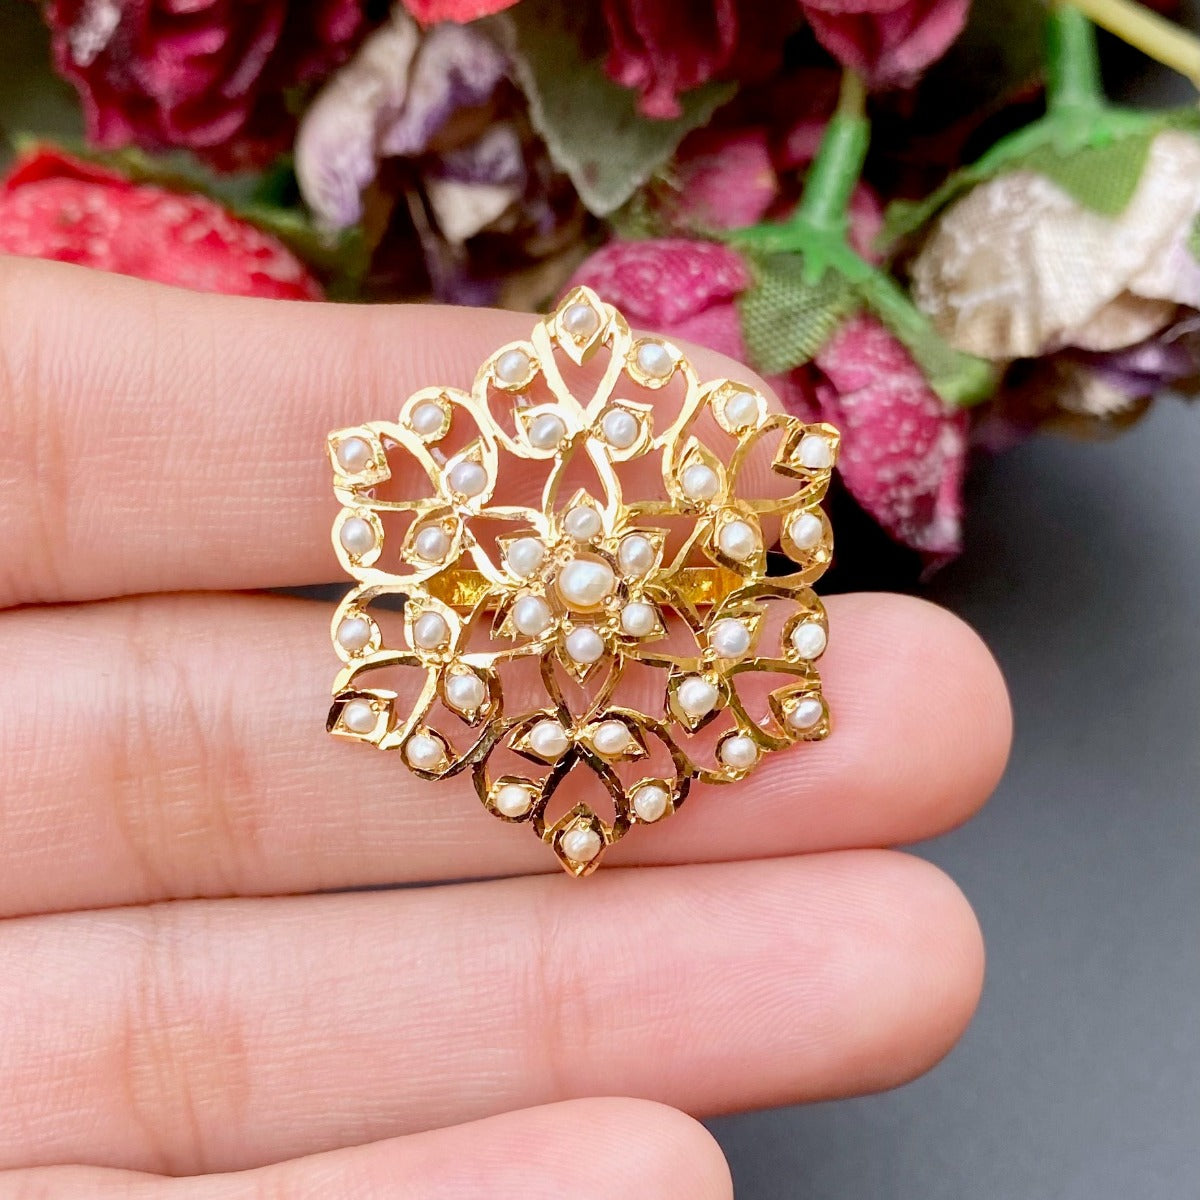 22 Carat Gold & Pearl Ring | Edwardian Era Inspired Design | Antique Looks 